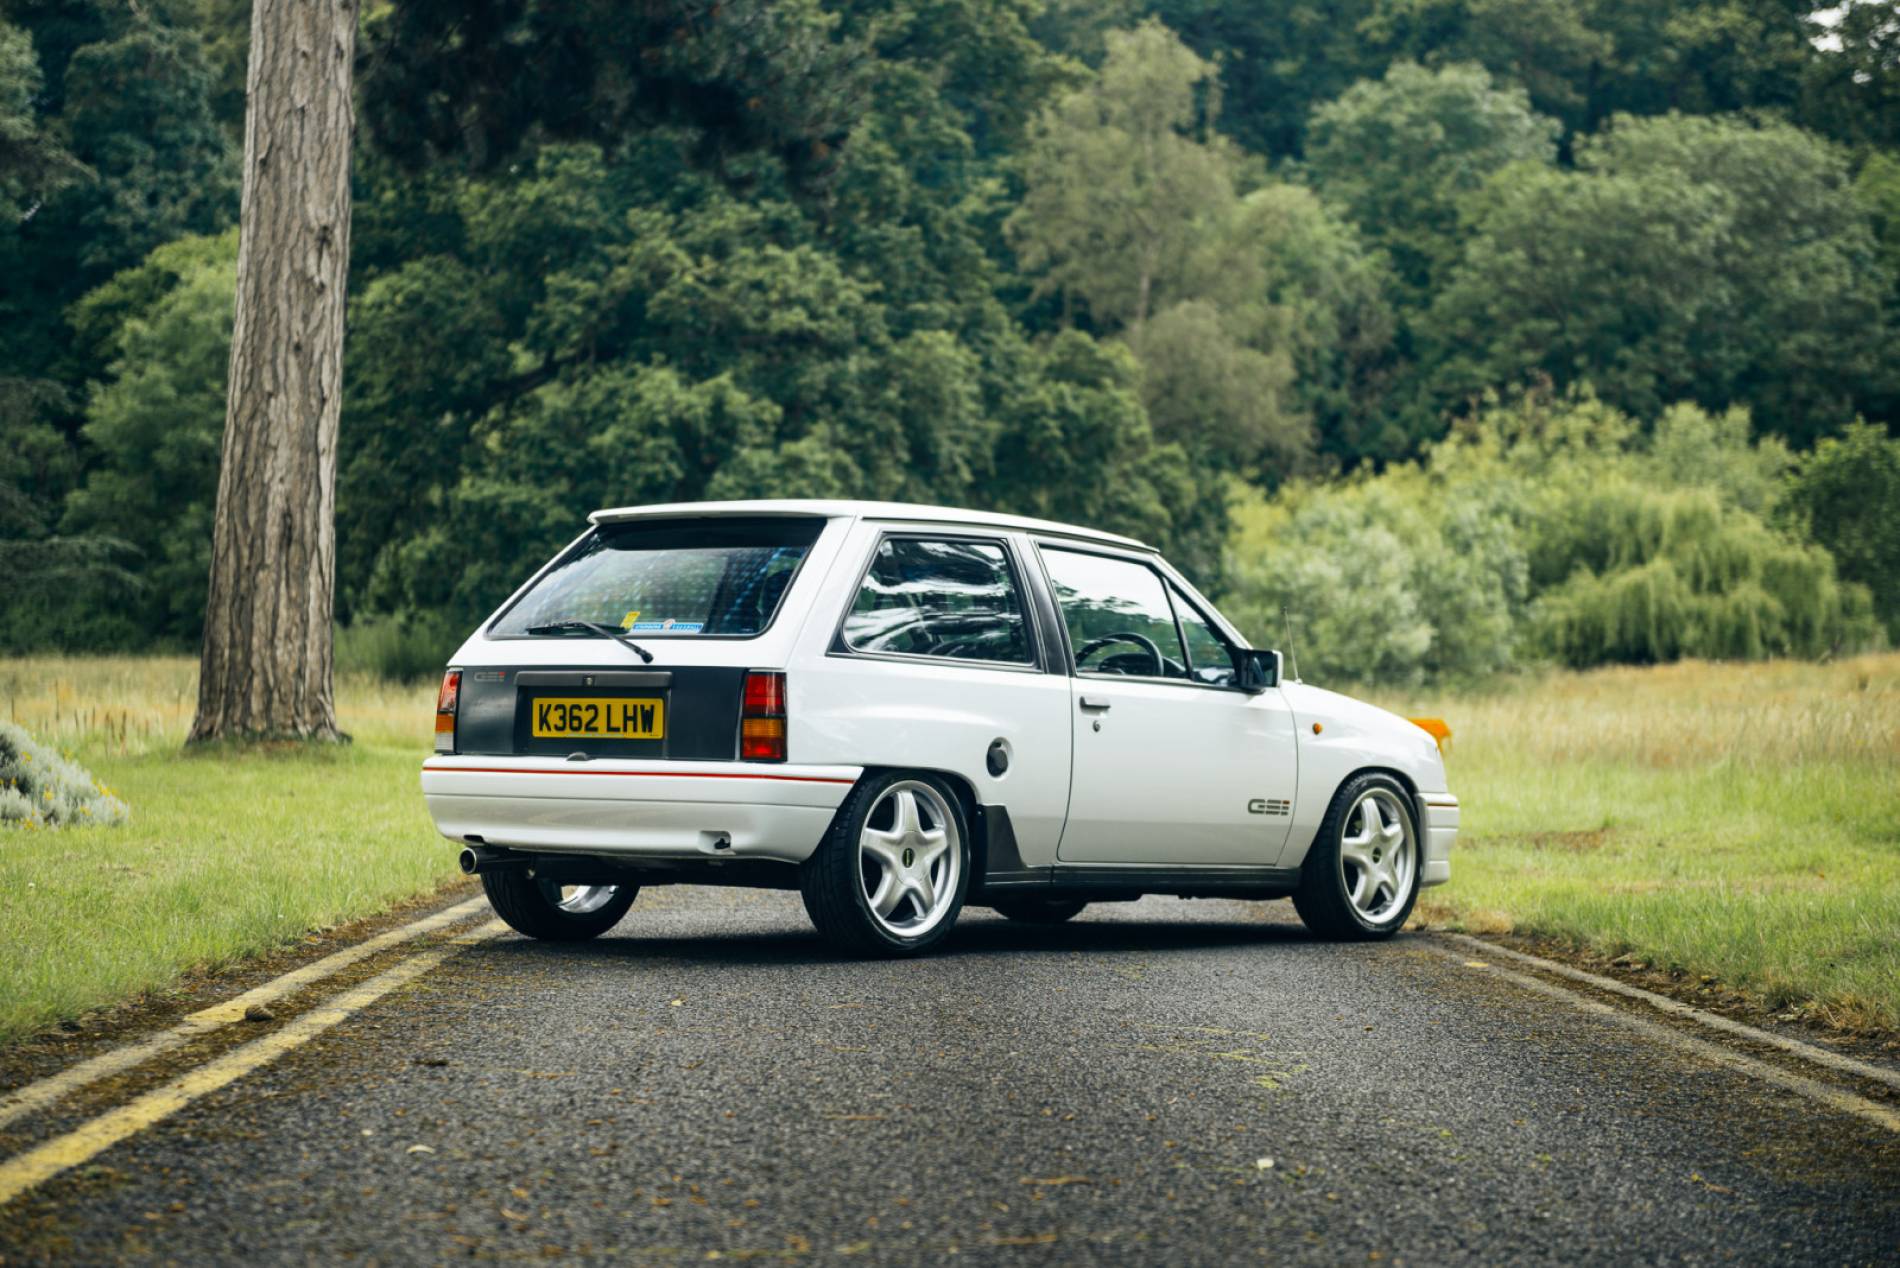 1992 Vauxhall Nova GSi